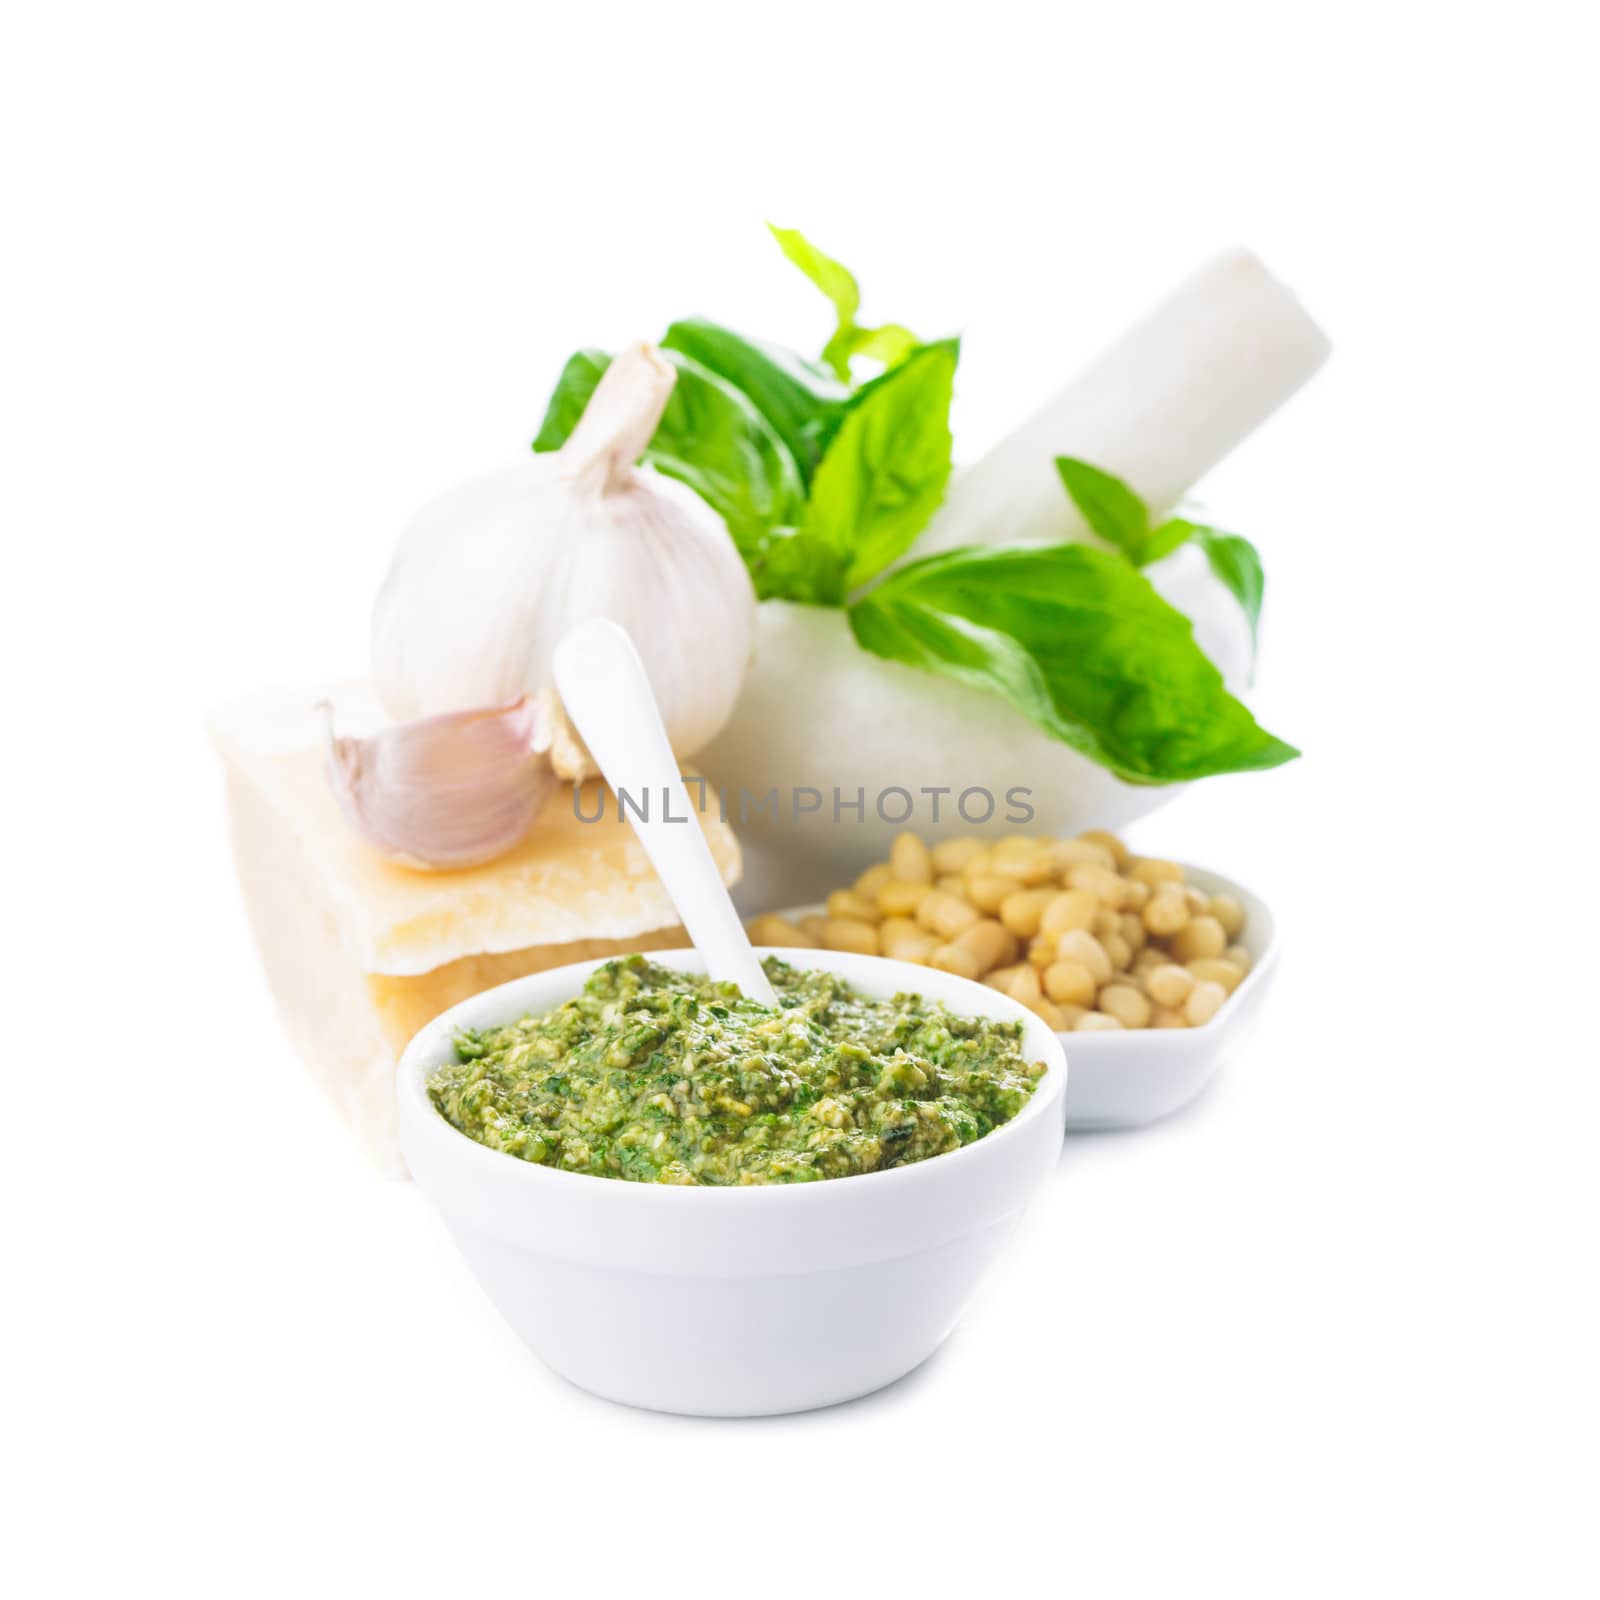 Pesto sauce ingredients by oksix